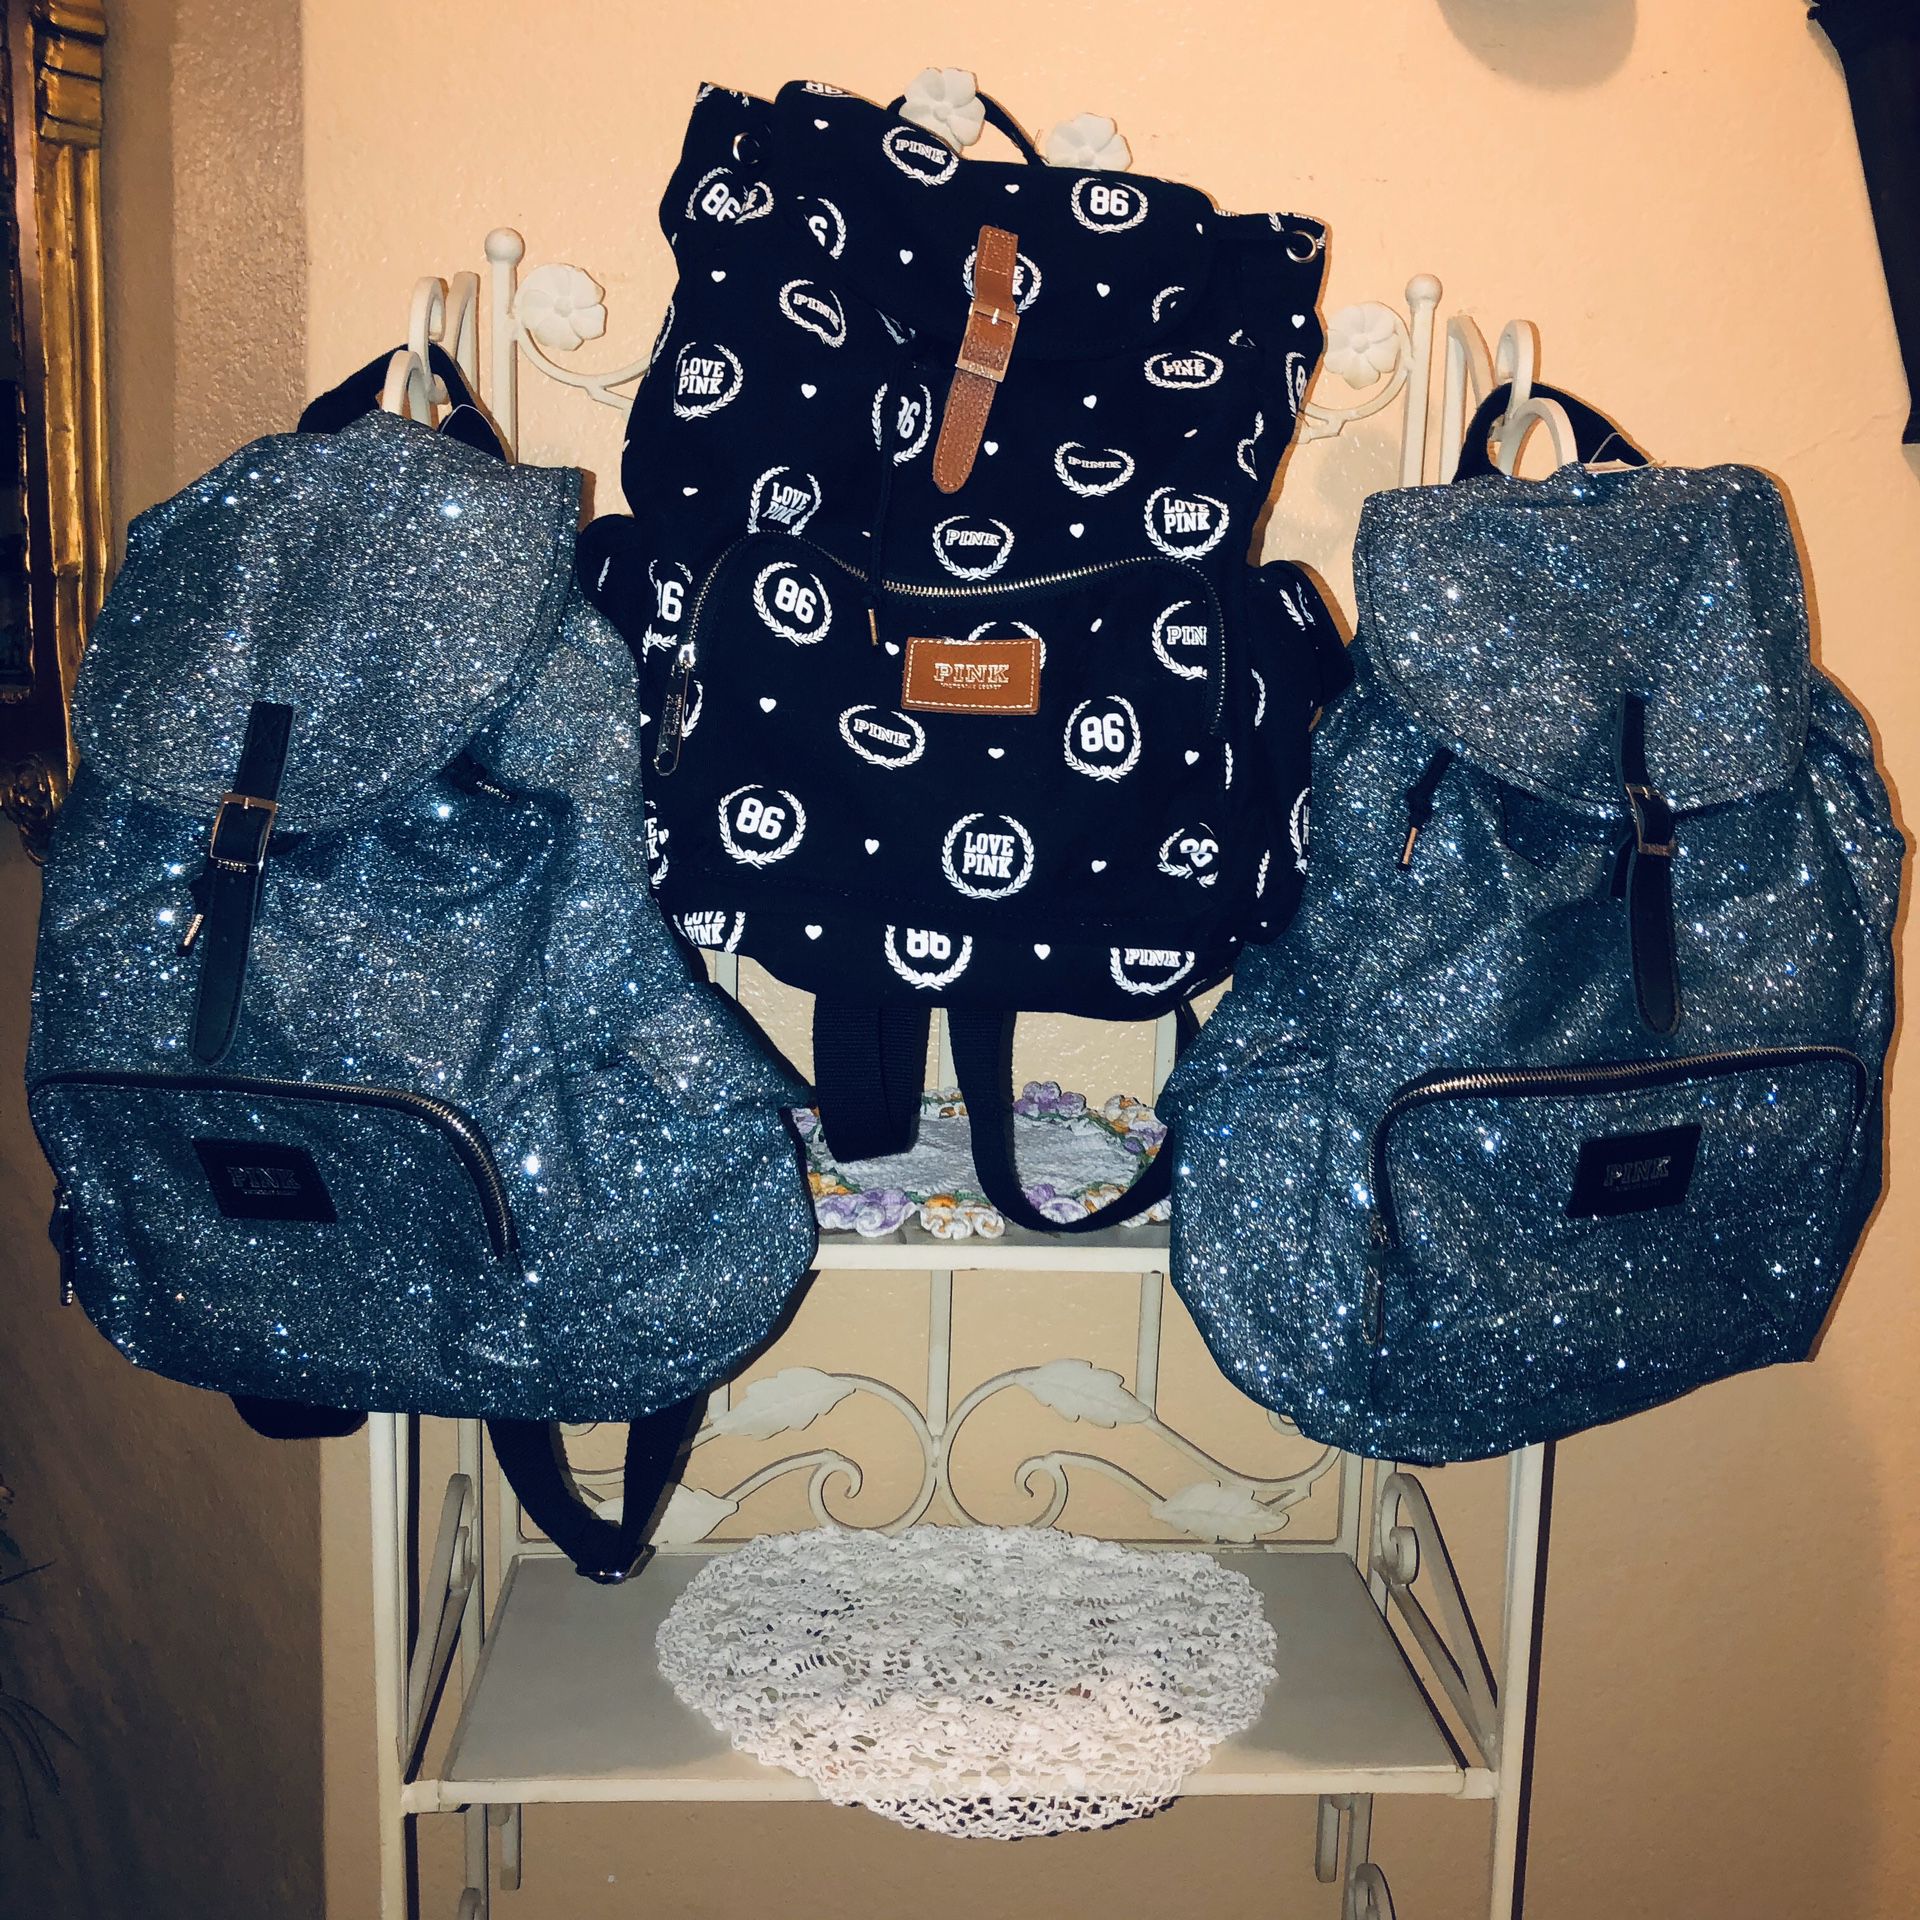 Victoria Secret PINK backpacks (2 NWT blue/metallic, sparkle) retail value 59.50 ( 1 blk/white NWOT)